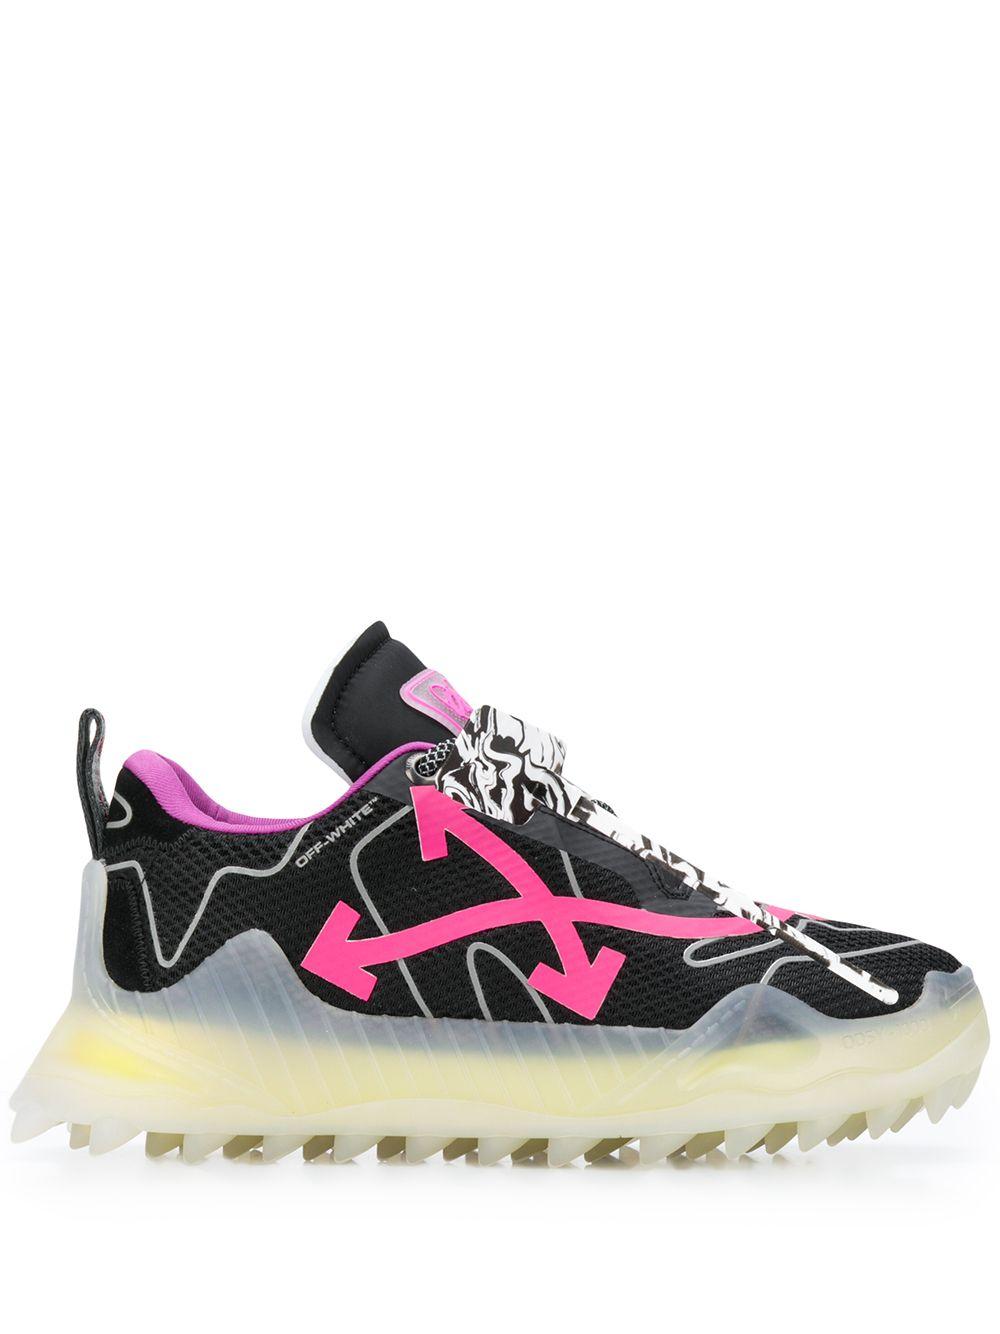 Off-White c/o Virgil Abloh Black & Pink Odsy Mesh Sneakers for Men 